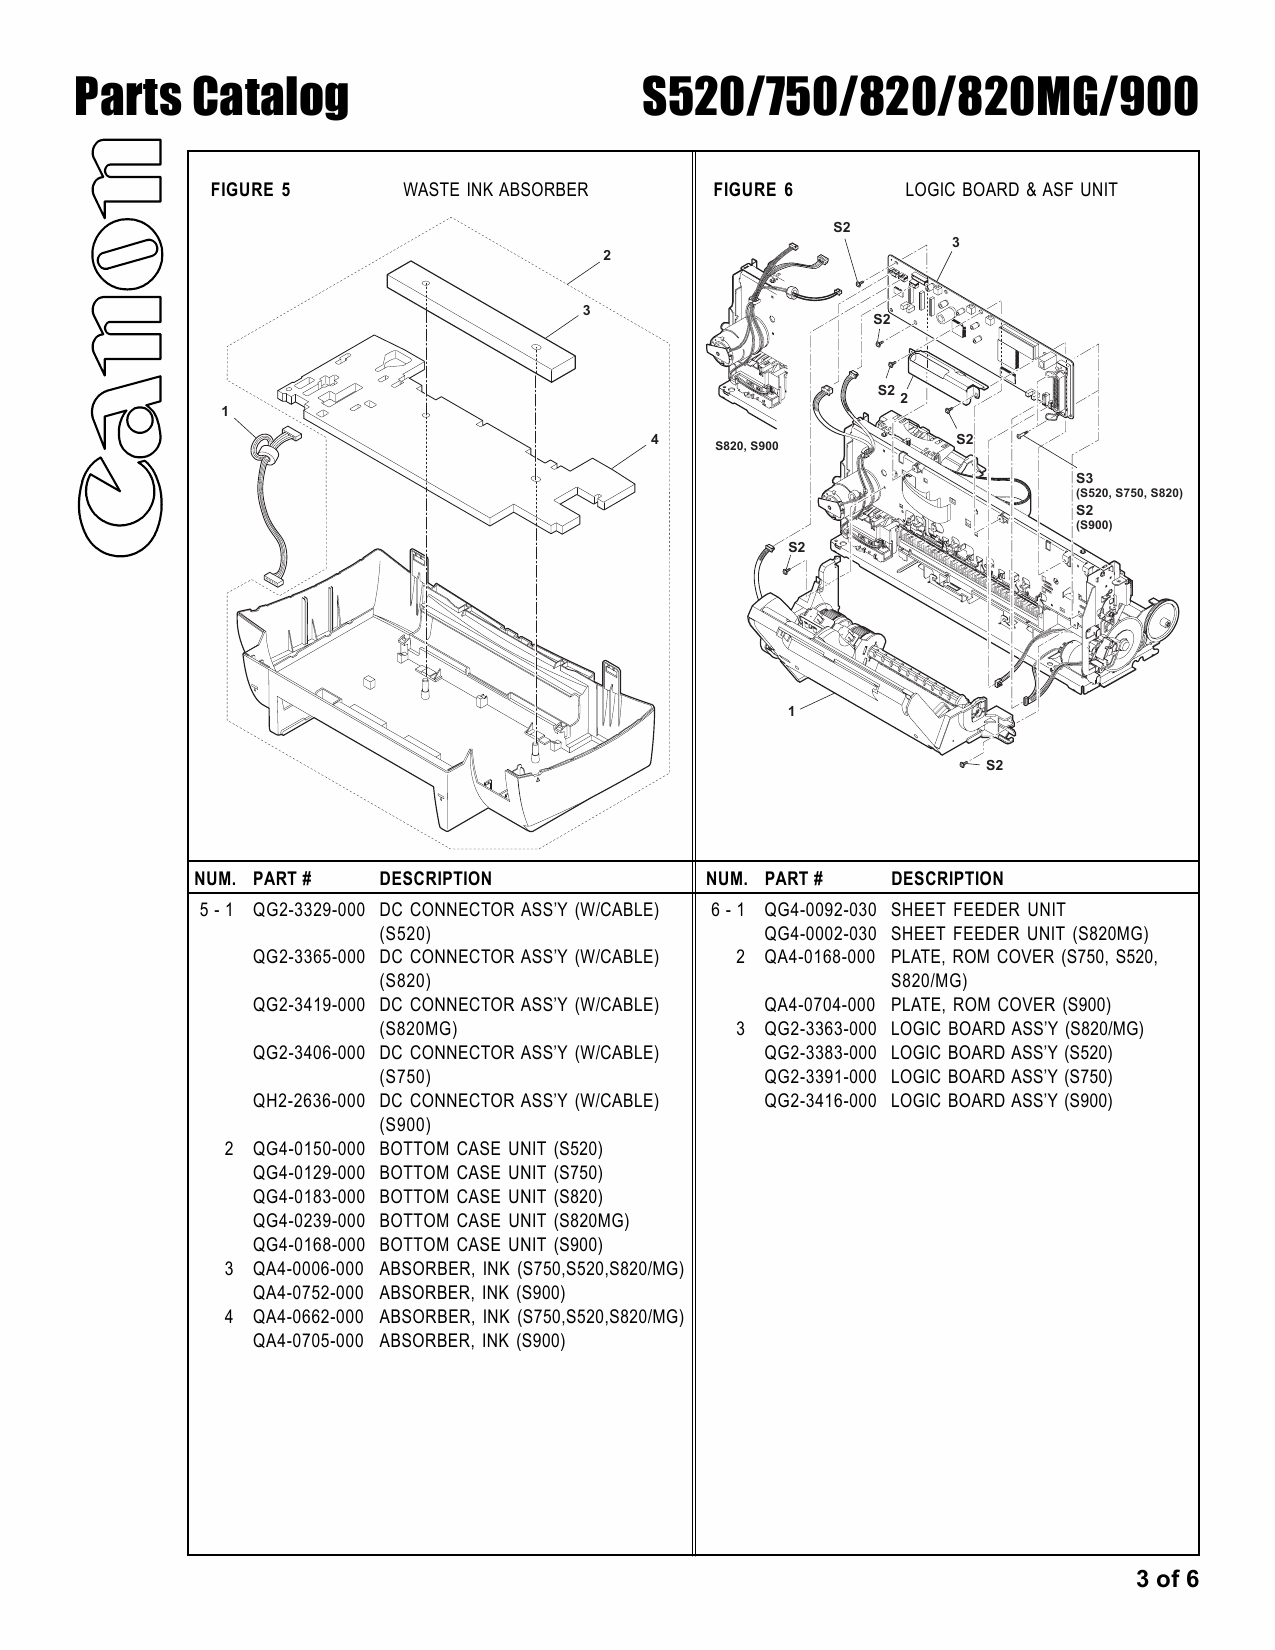 Canon PIXUS S520 S750 S820 S820MG S900 Parts Catalog Manual-4